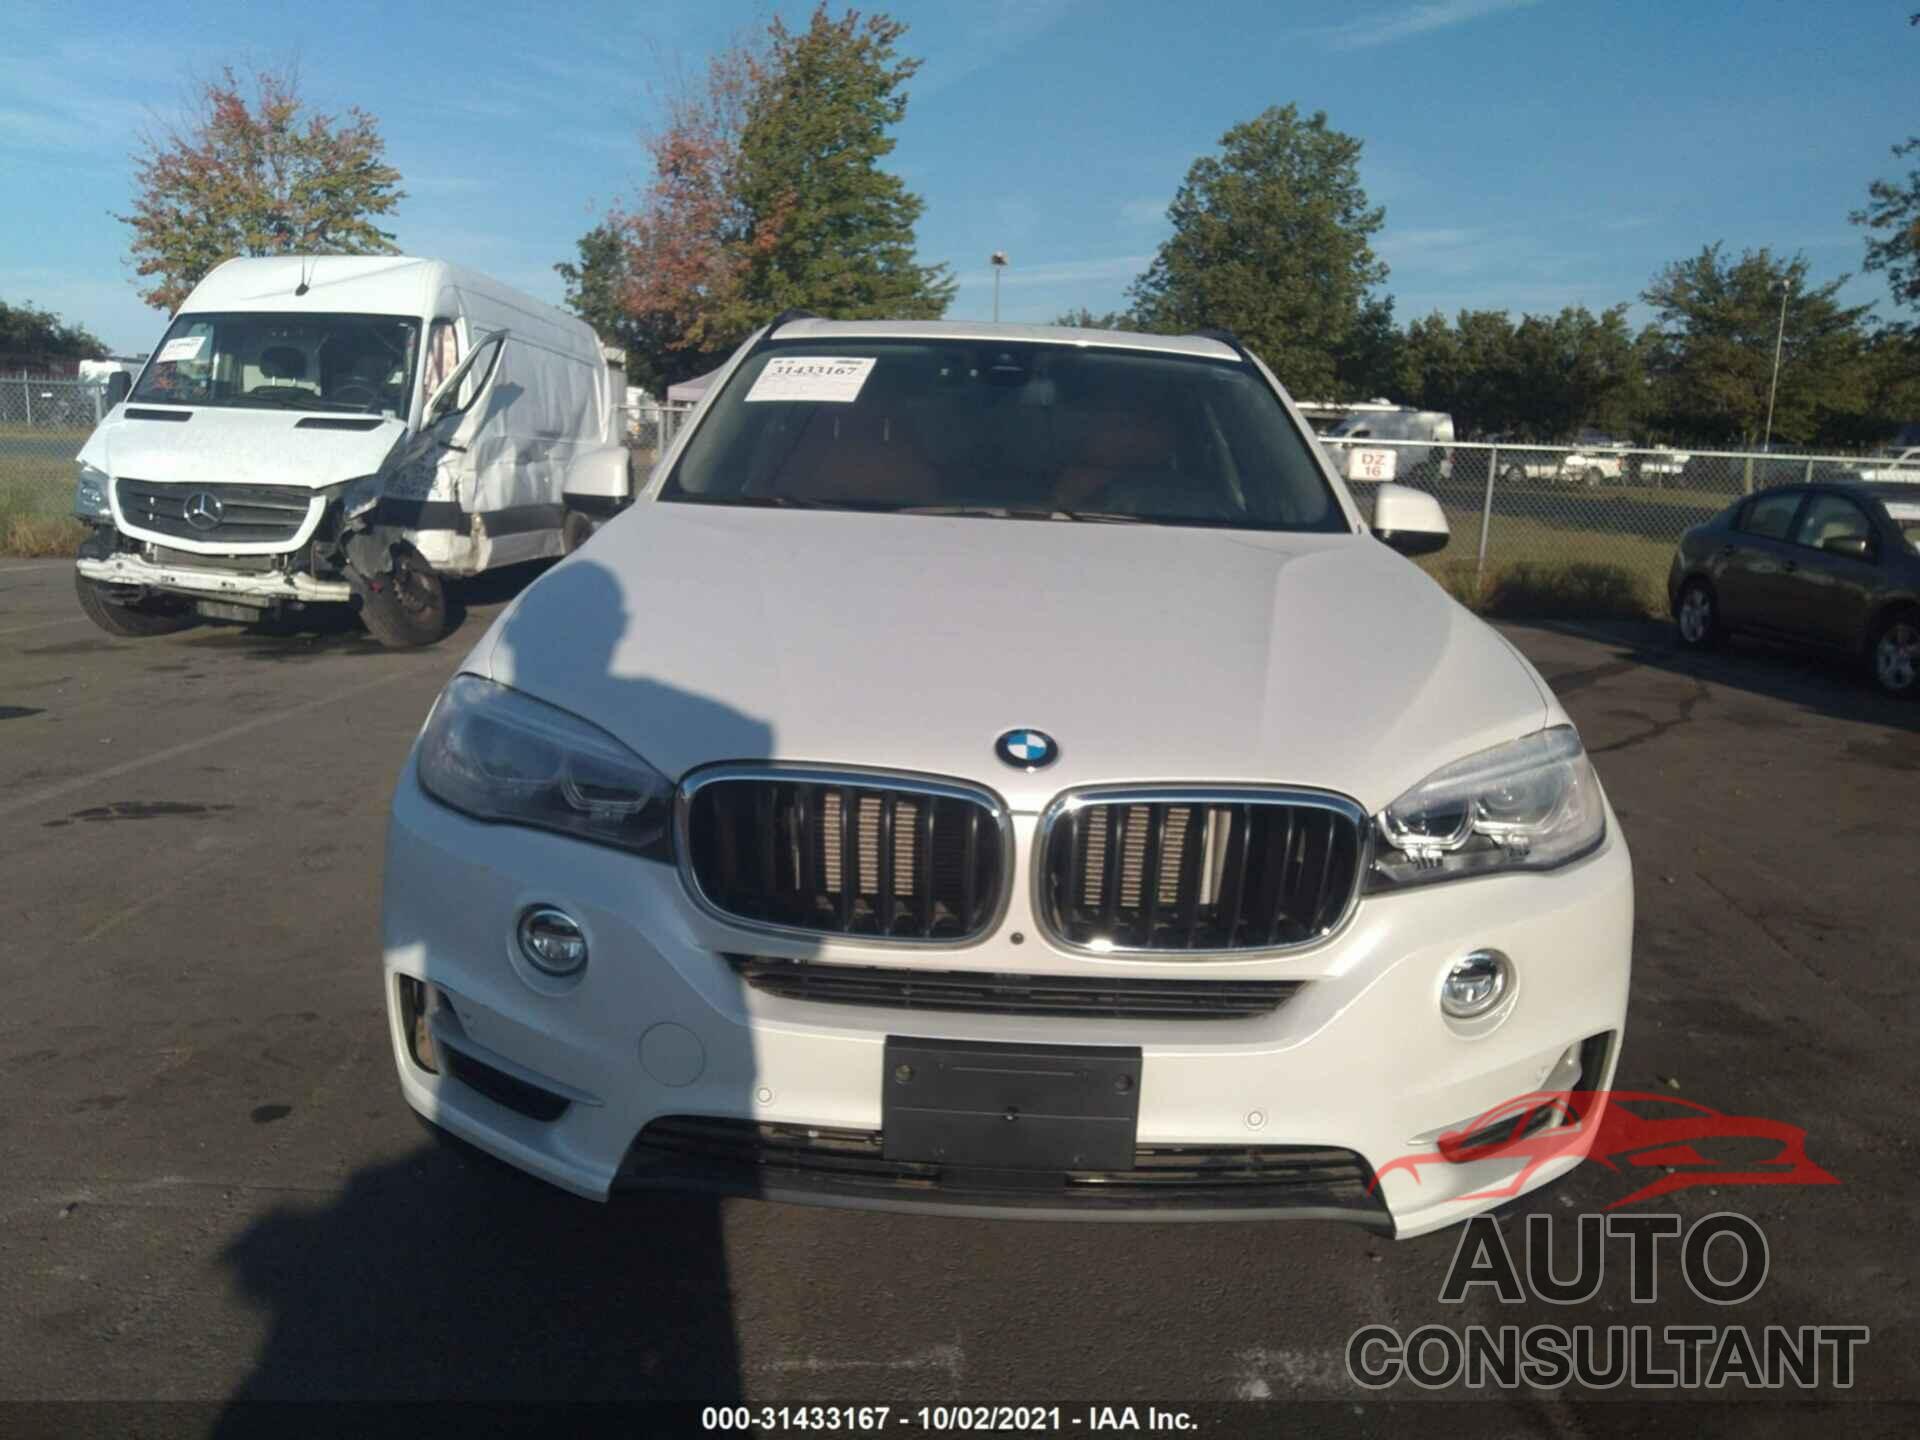 BMW X5 2016 - 5UXKR0C52G0P22925